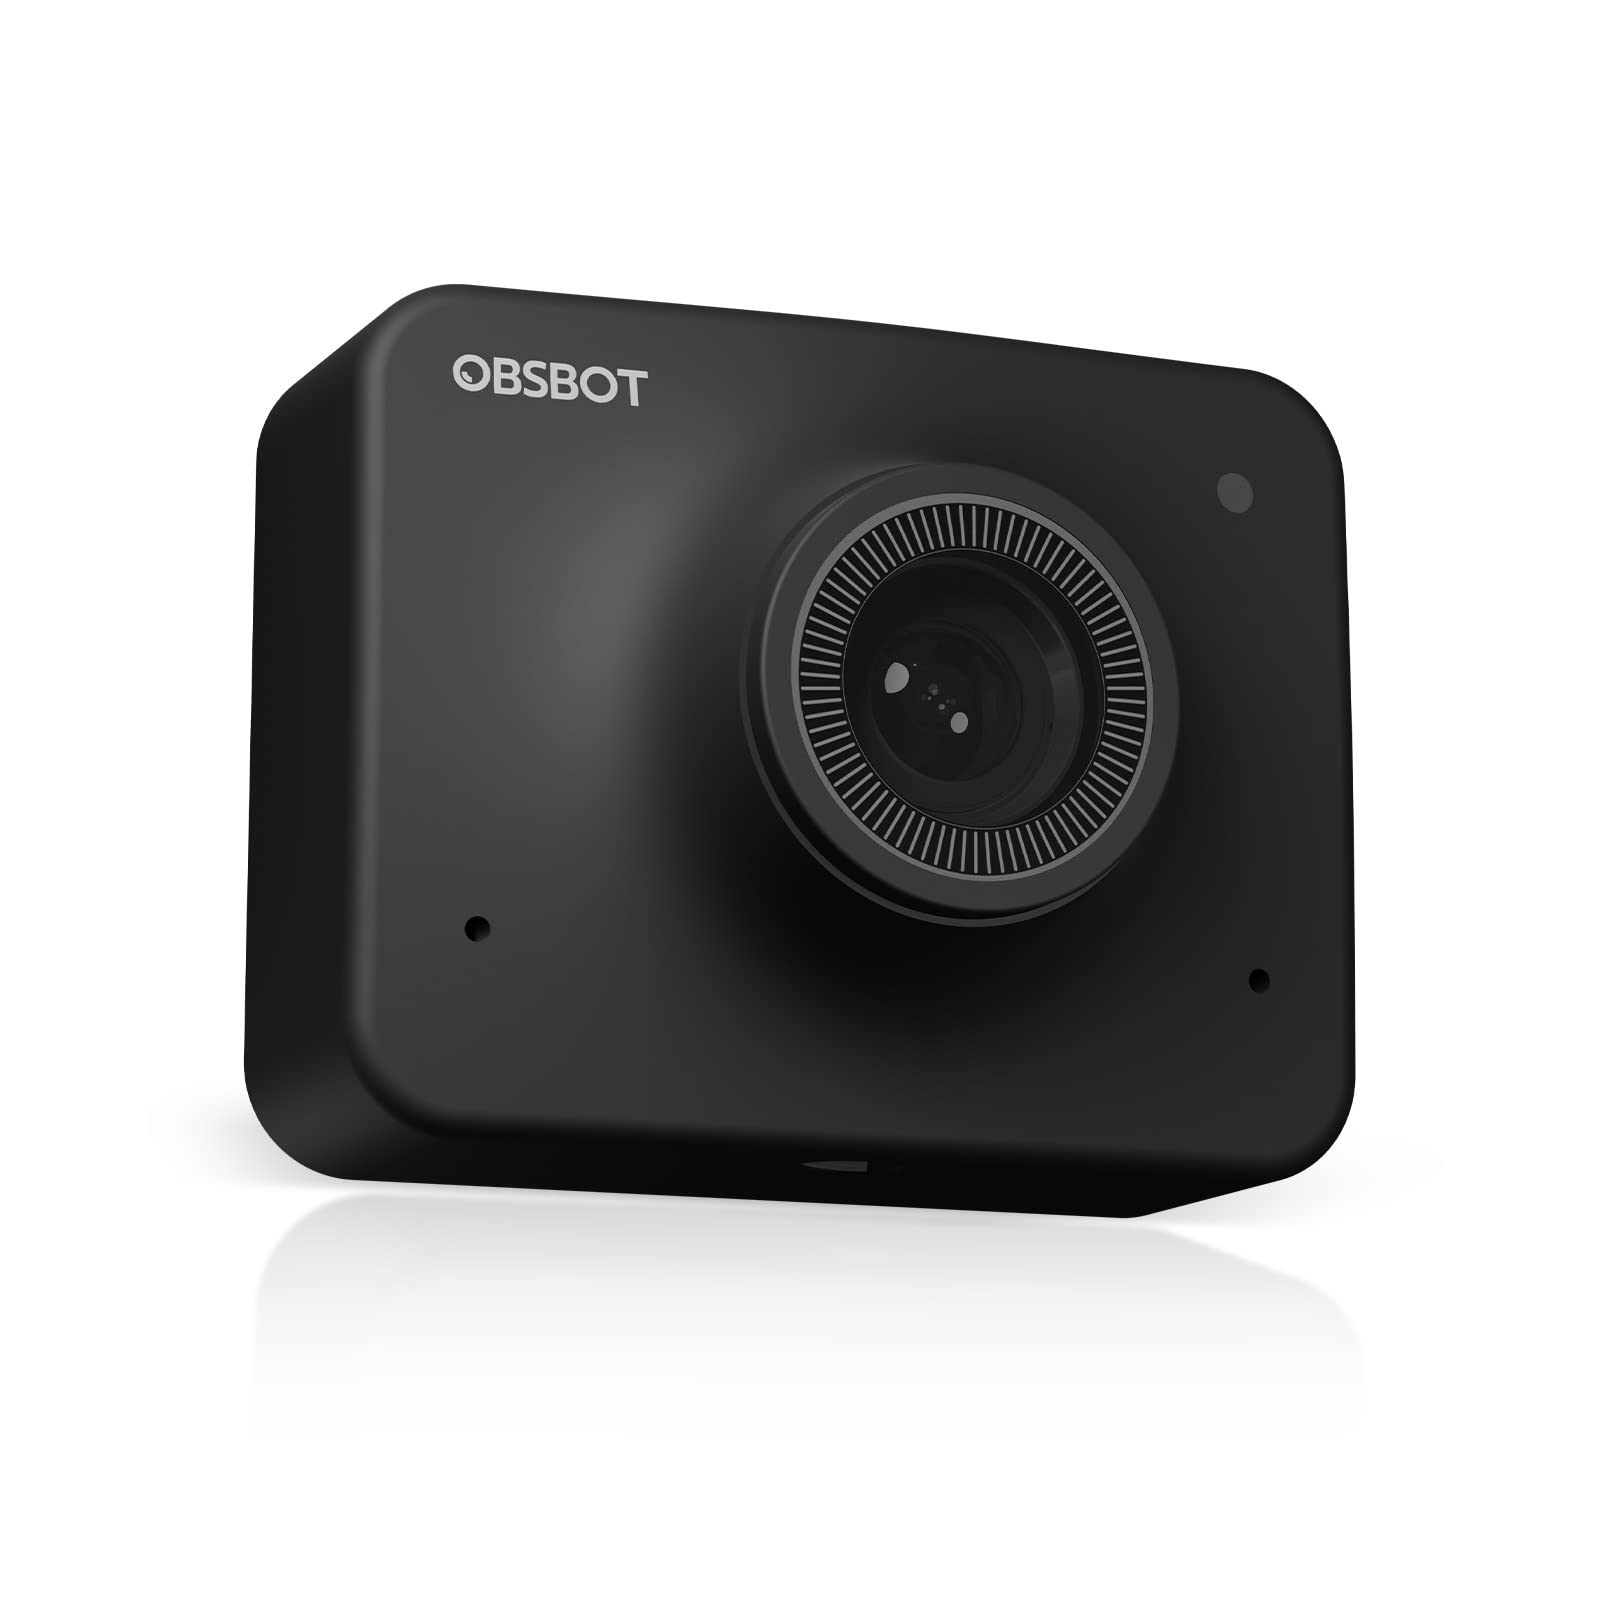  OBSBOT قابل كاميرا ويب 1080P Ultra HD مدعومة بالذكاء الاصطناعي كاميرا مؤتمرات فيديو 1080P مع تأطير تلقائي AI HDR و 2 X تقريب...